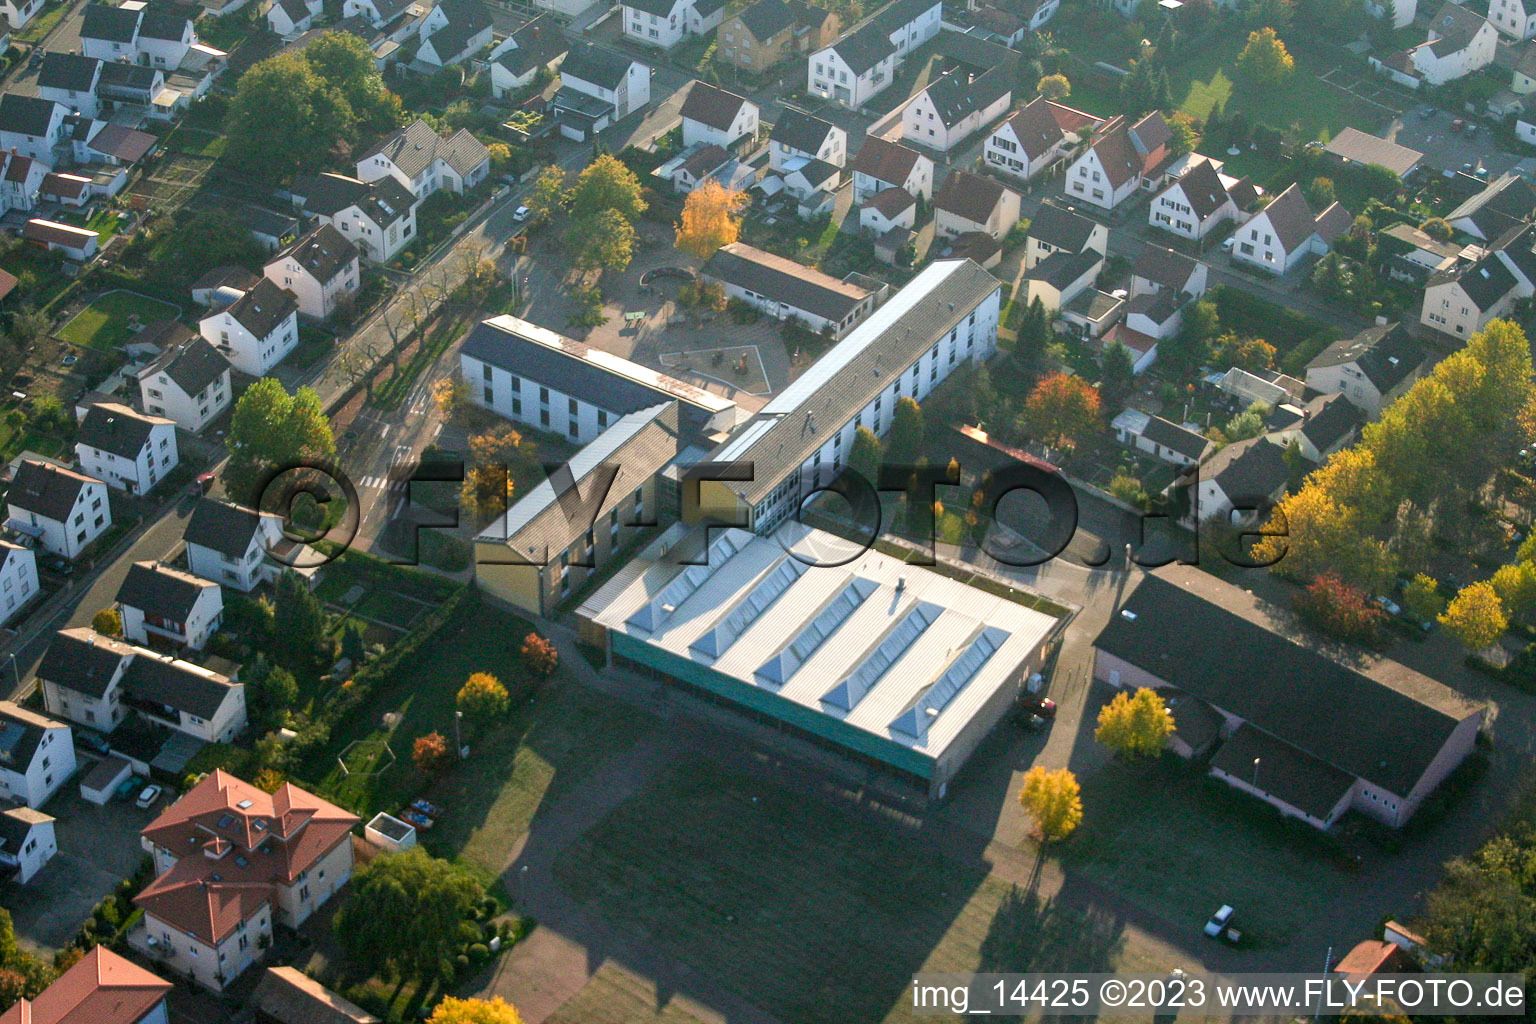 Primary school in the district Herxheim in Herxheim bei Landau/Pfalz in the state Rhineland-Palatinate, Germany